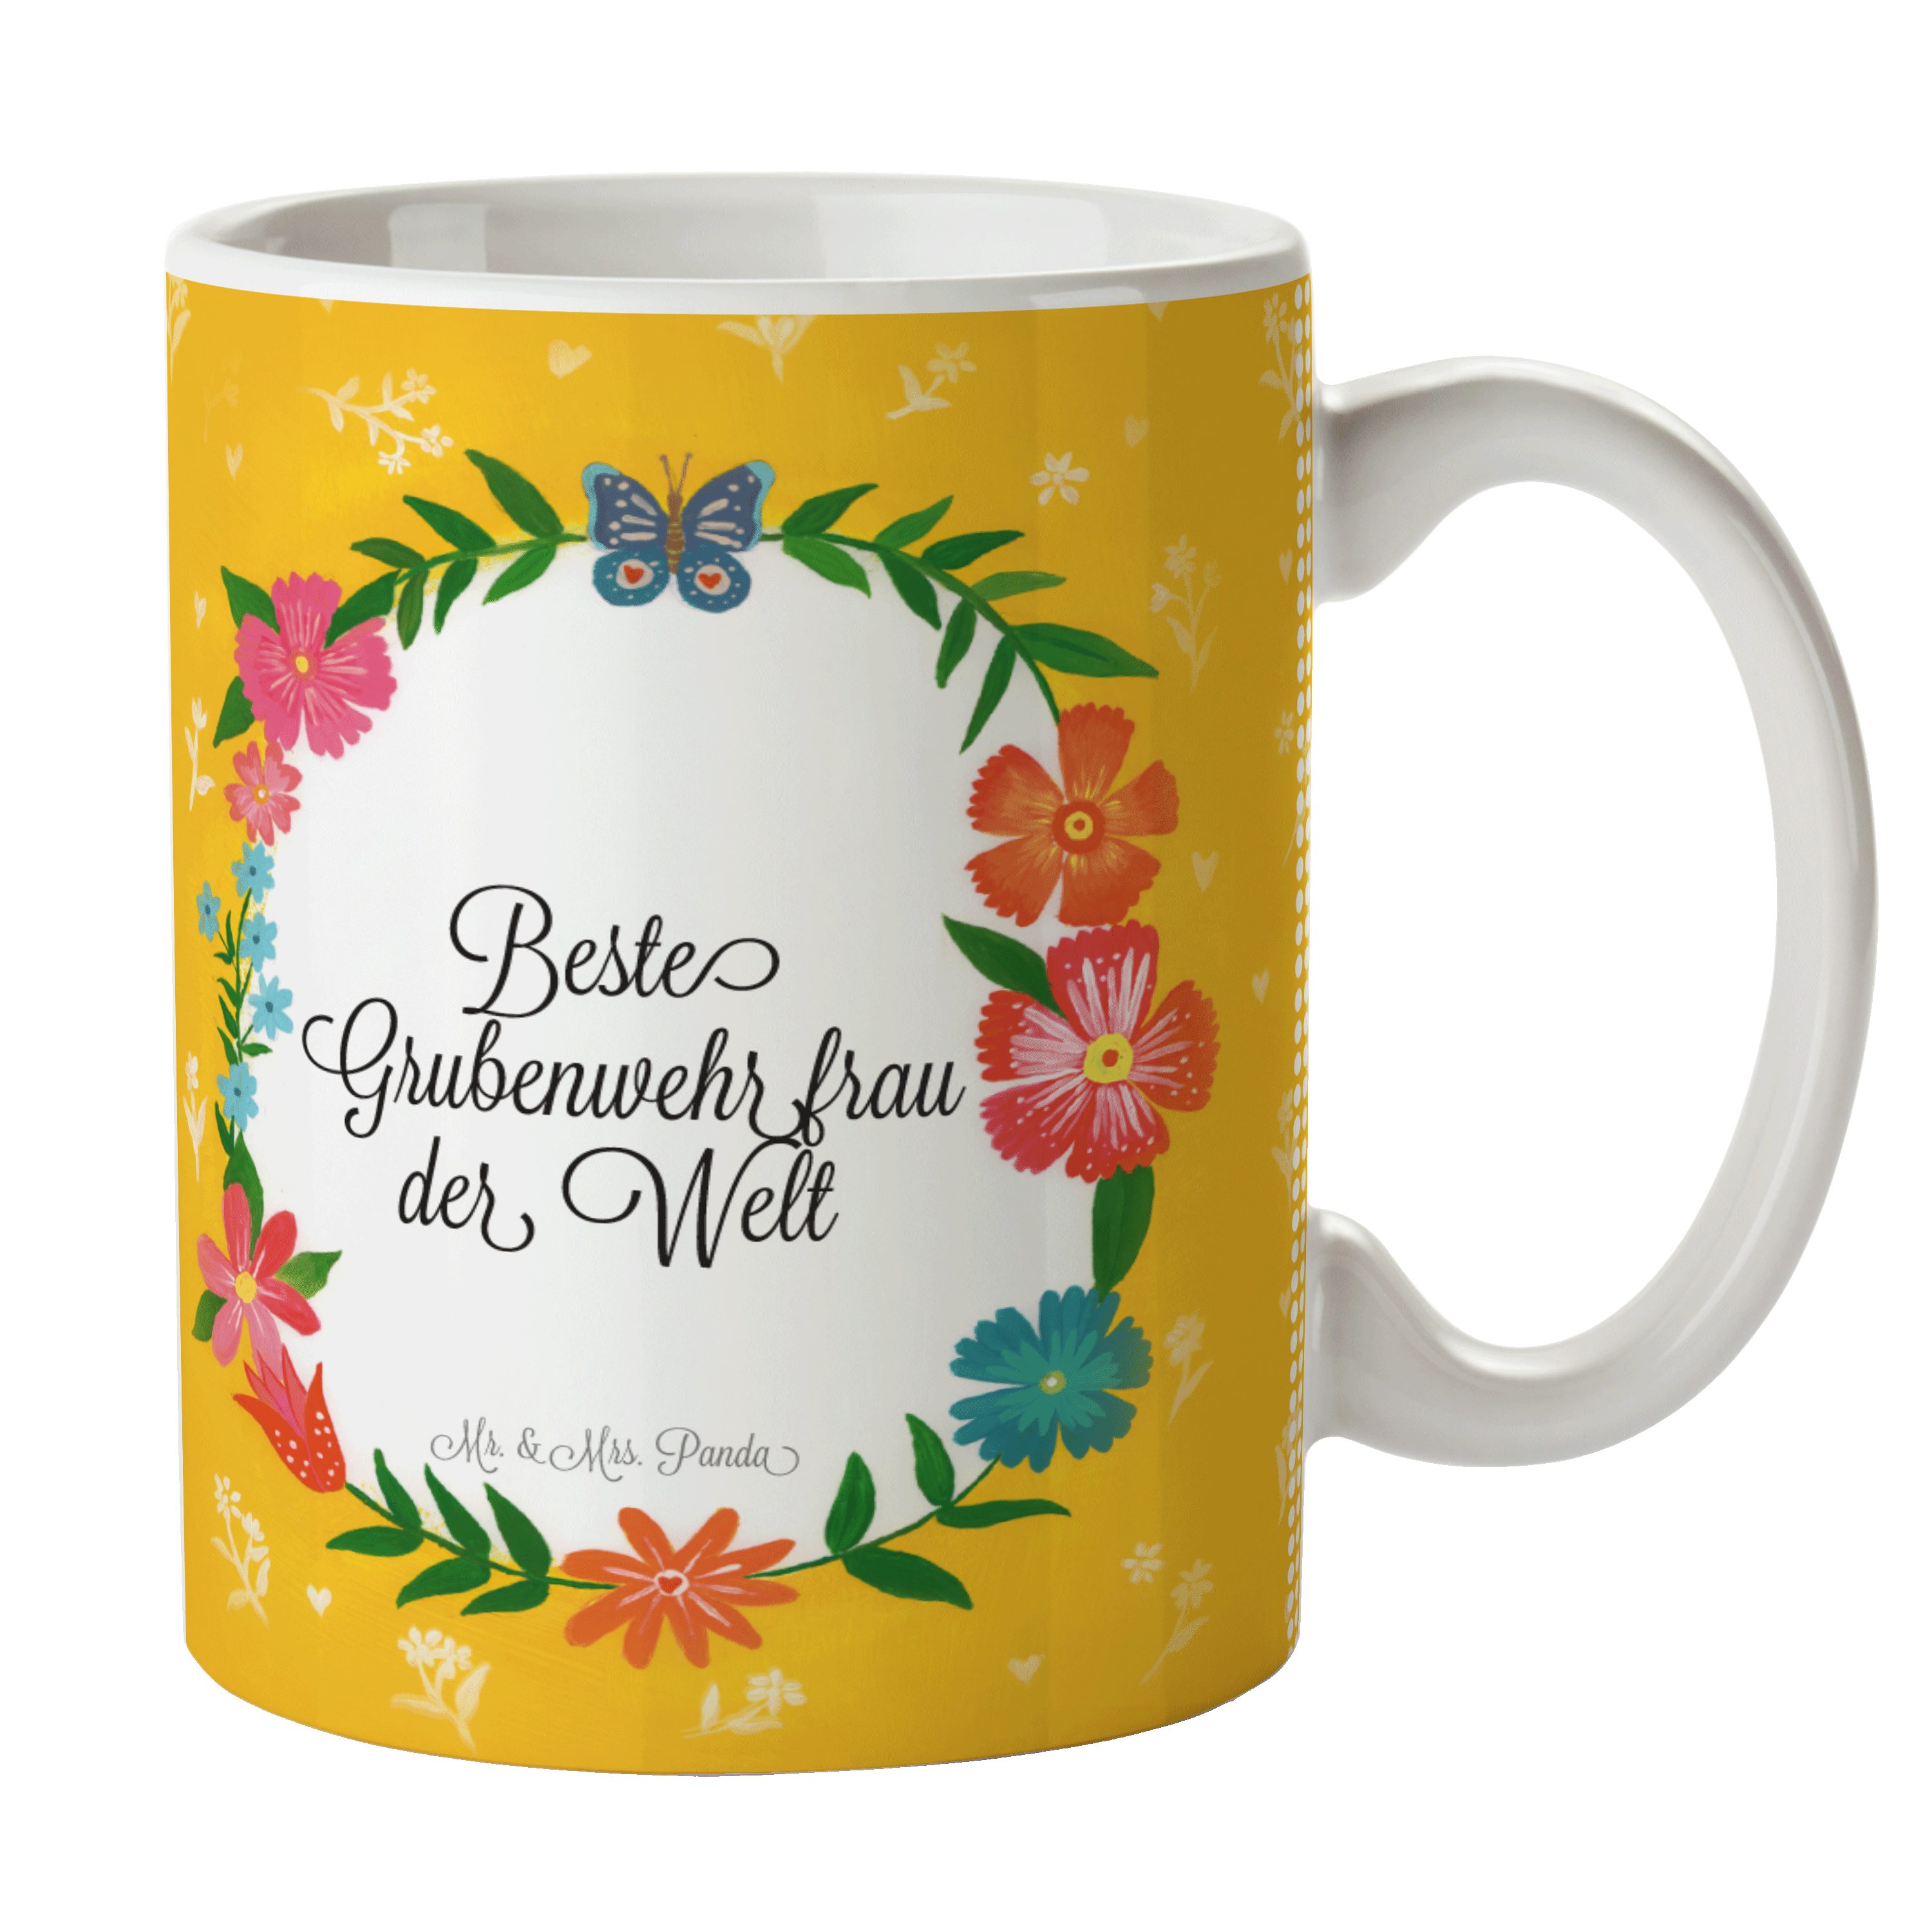 Mr. & Mrs. Panda Tasse Grubenwehrfrau - Geschenk, Gratulation, Kaffeebecher, Teebecher, Büro, Keramik